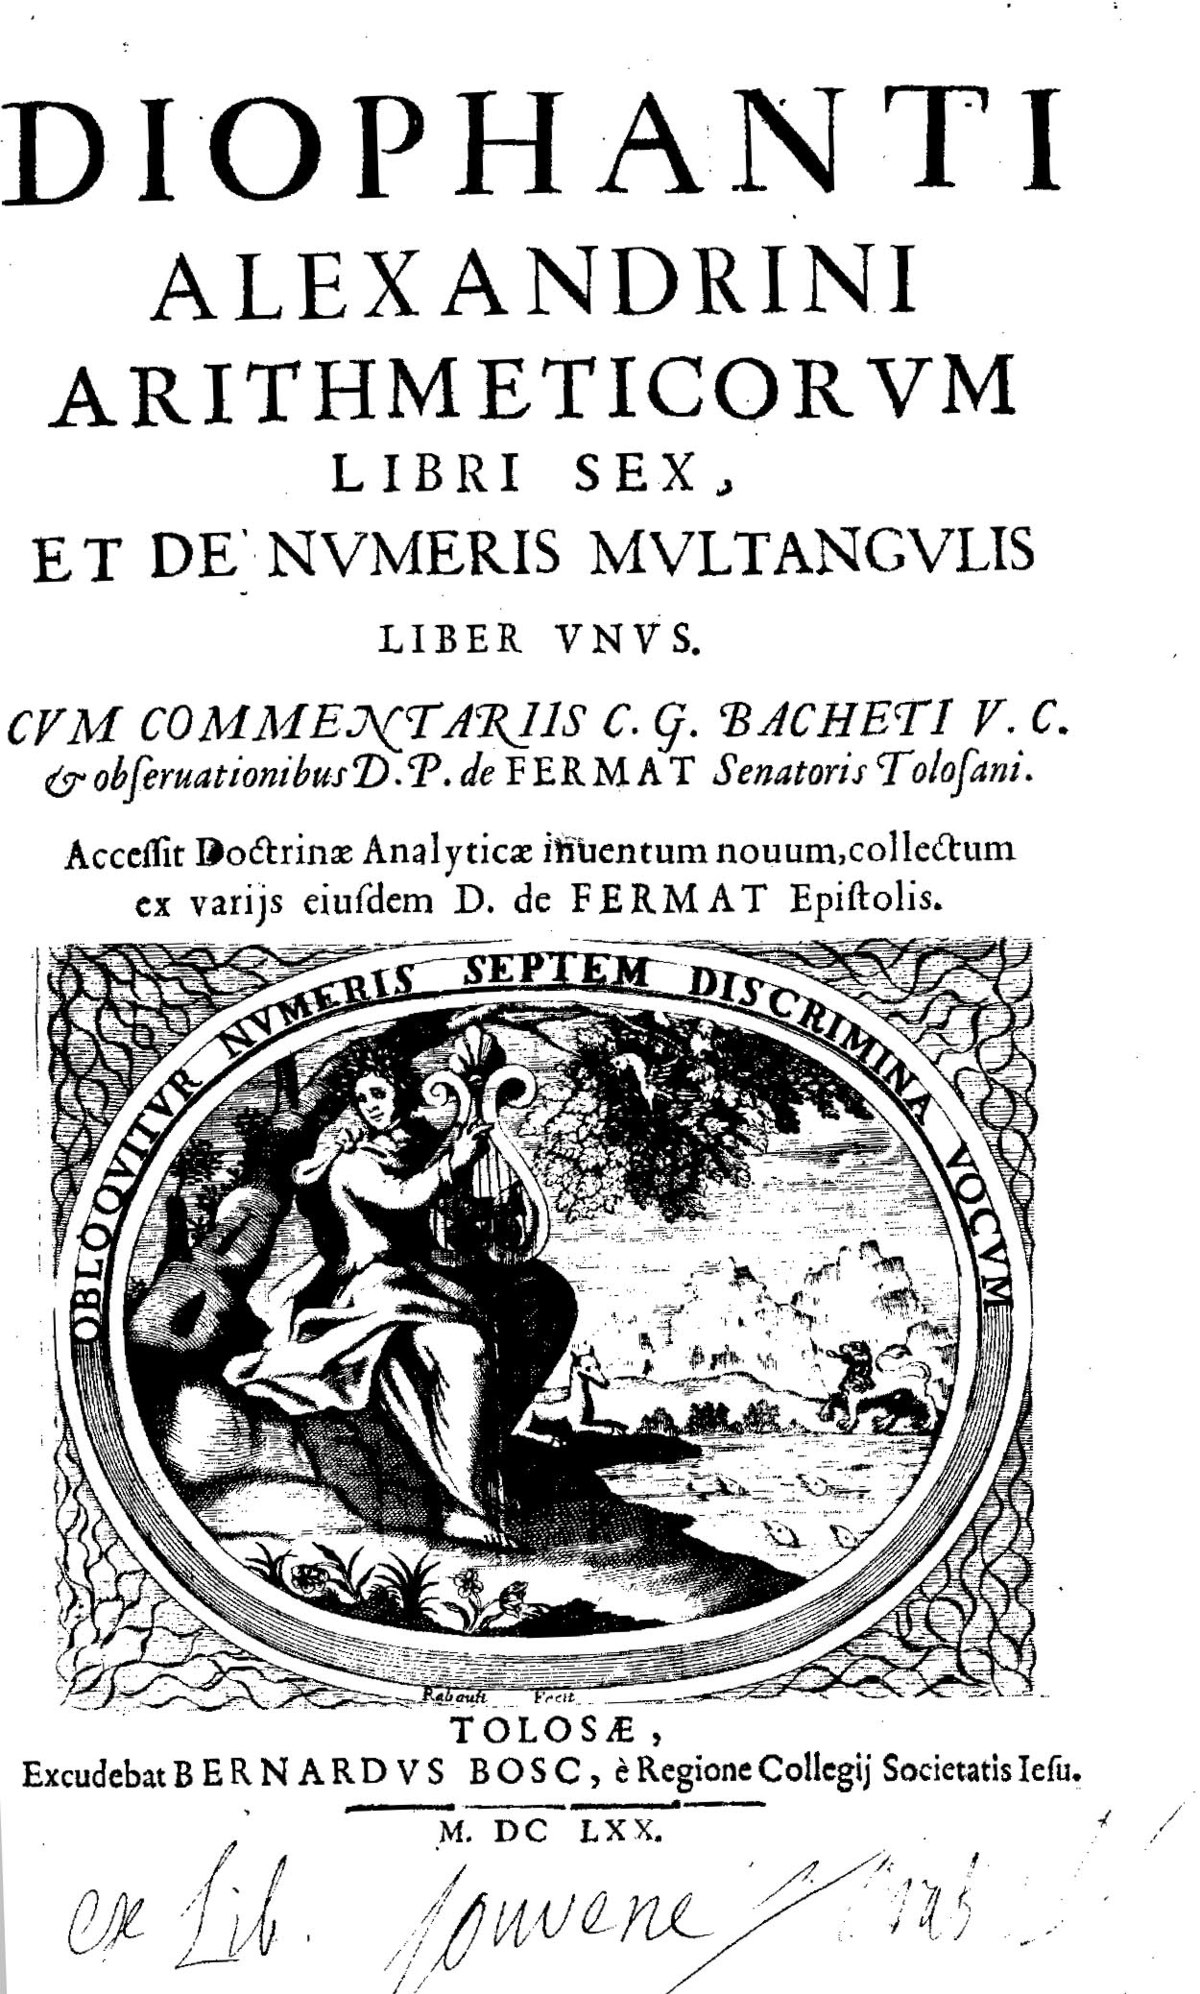 File Diophantus Aritmeticorum Libri 6 1670 Jpeg Wikimedia Commons